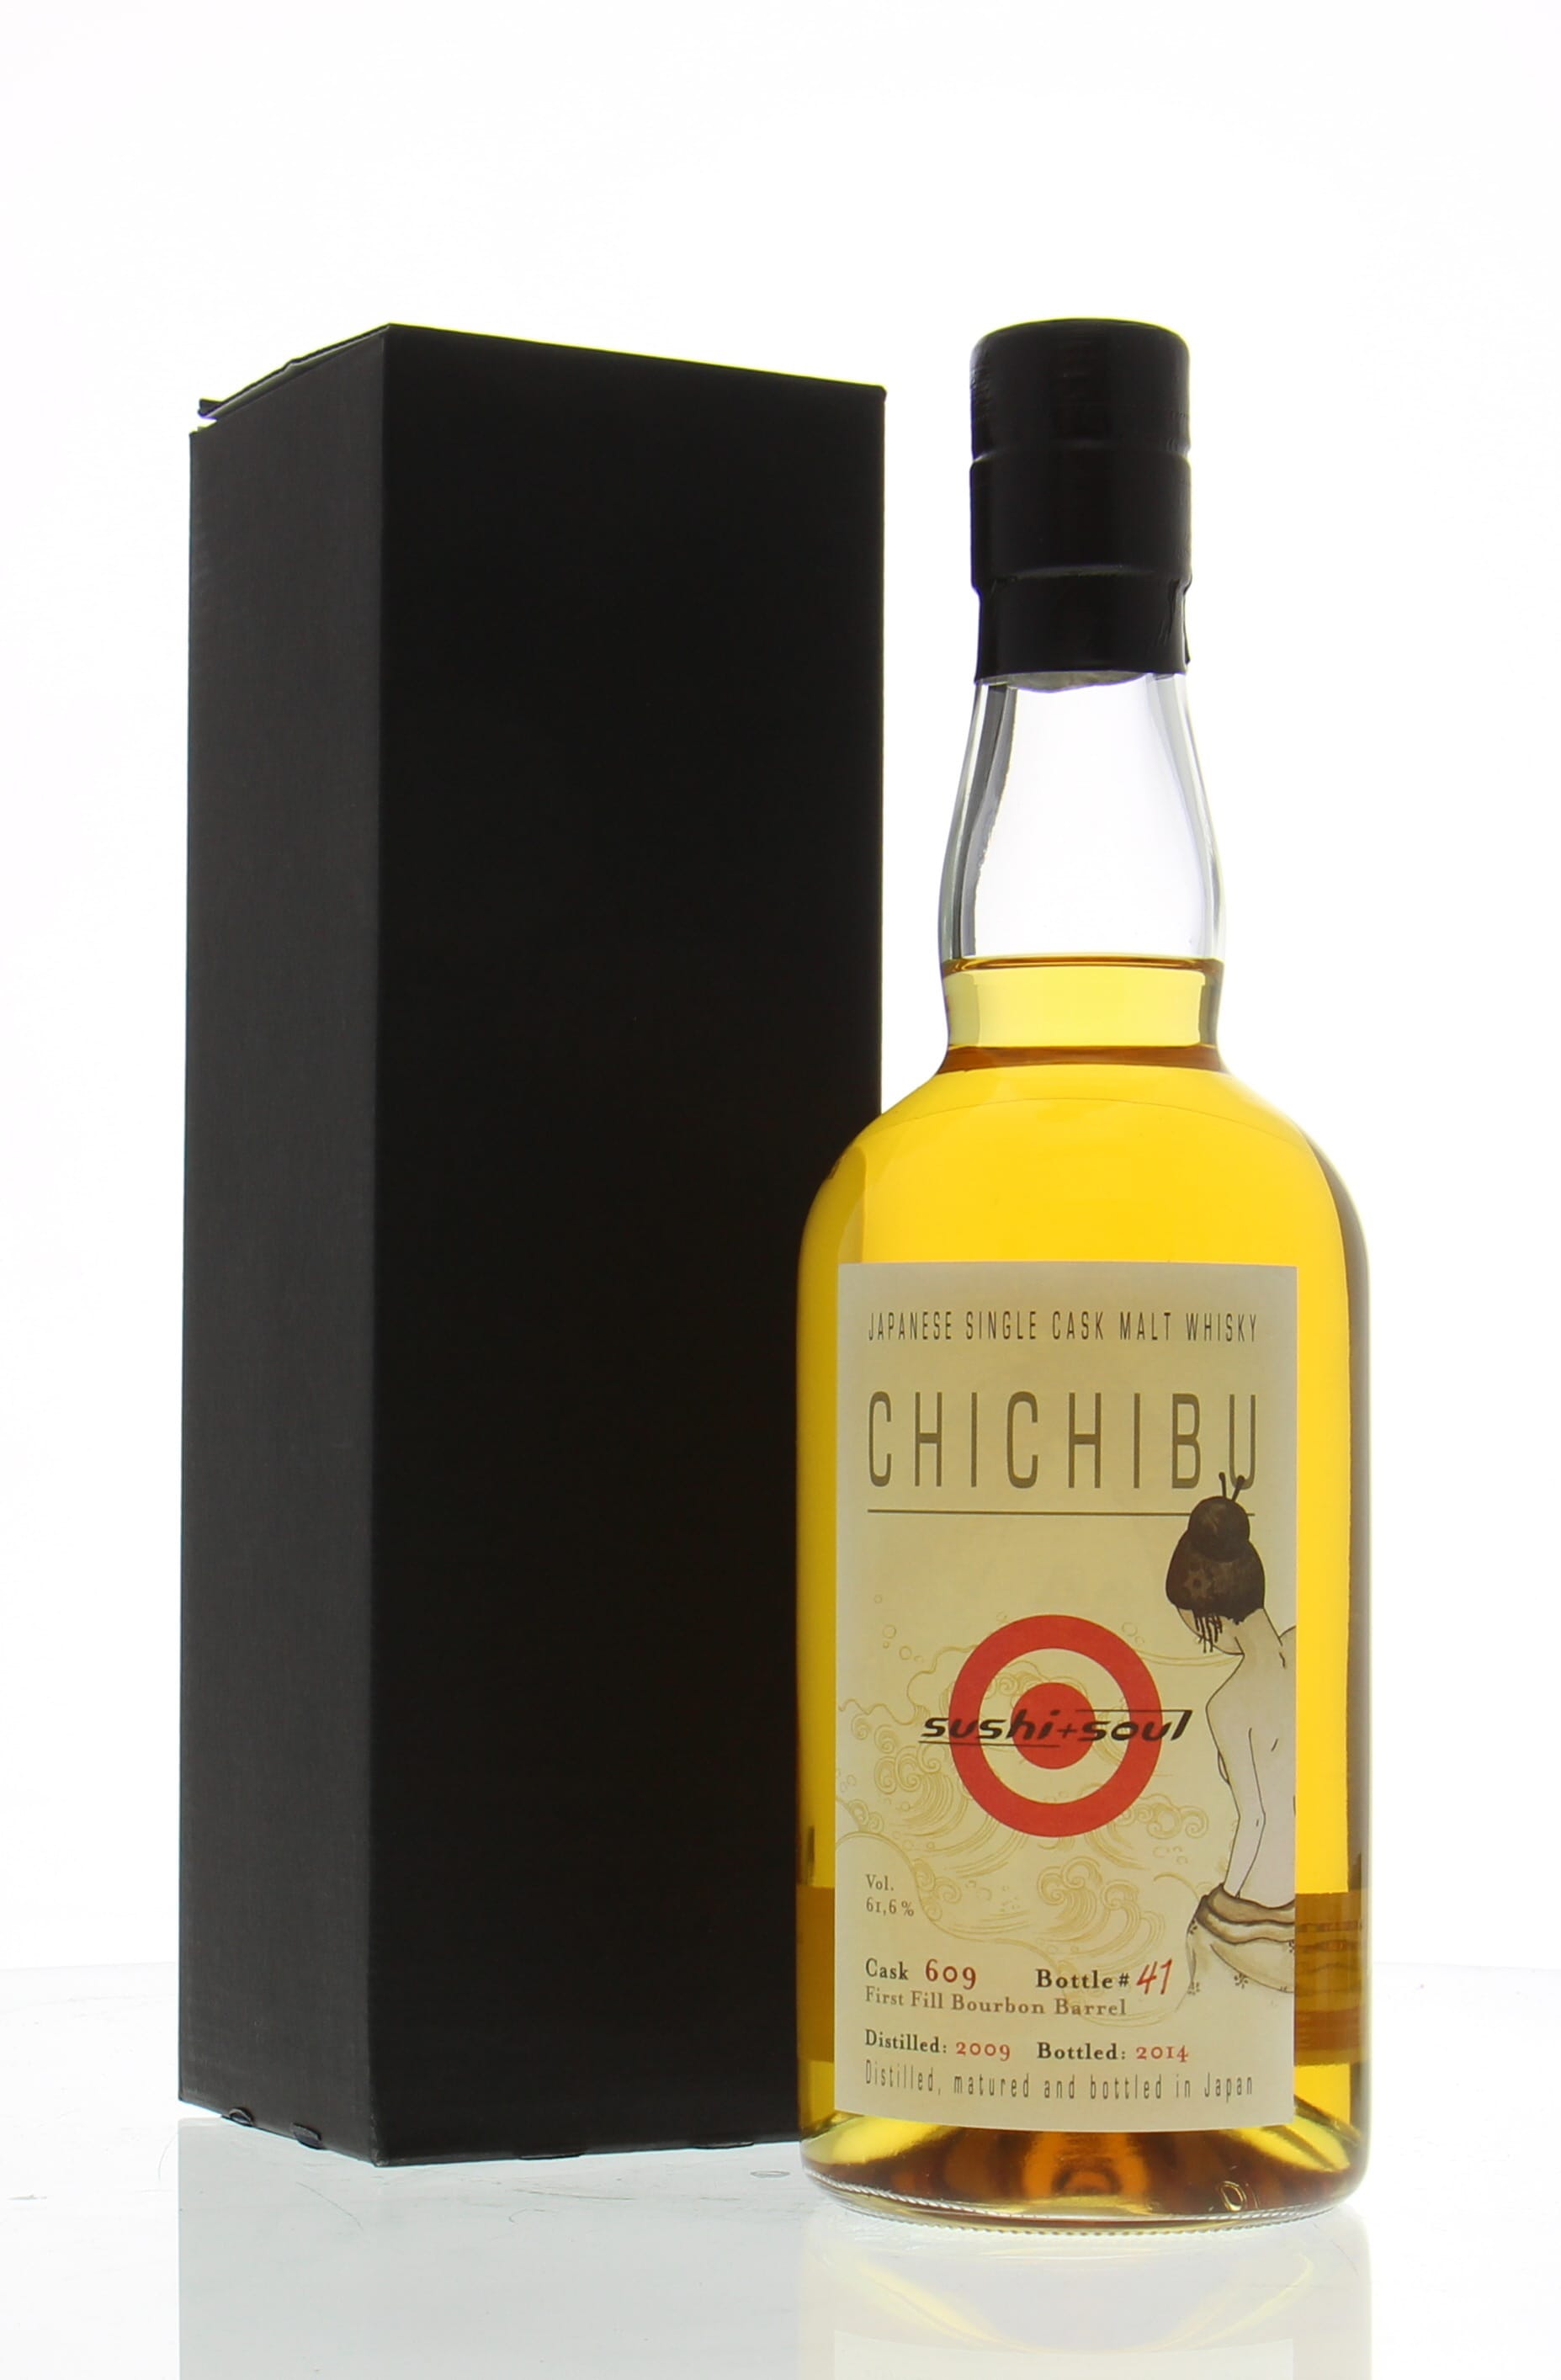 Chichibu - Ichiro's Malt Geisha label For Sushi+Soul Cask:609 61.6% 2009 In Original Container